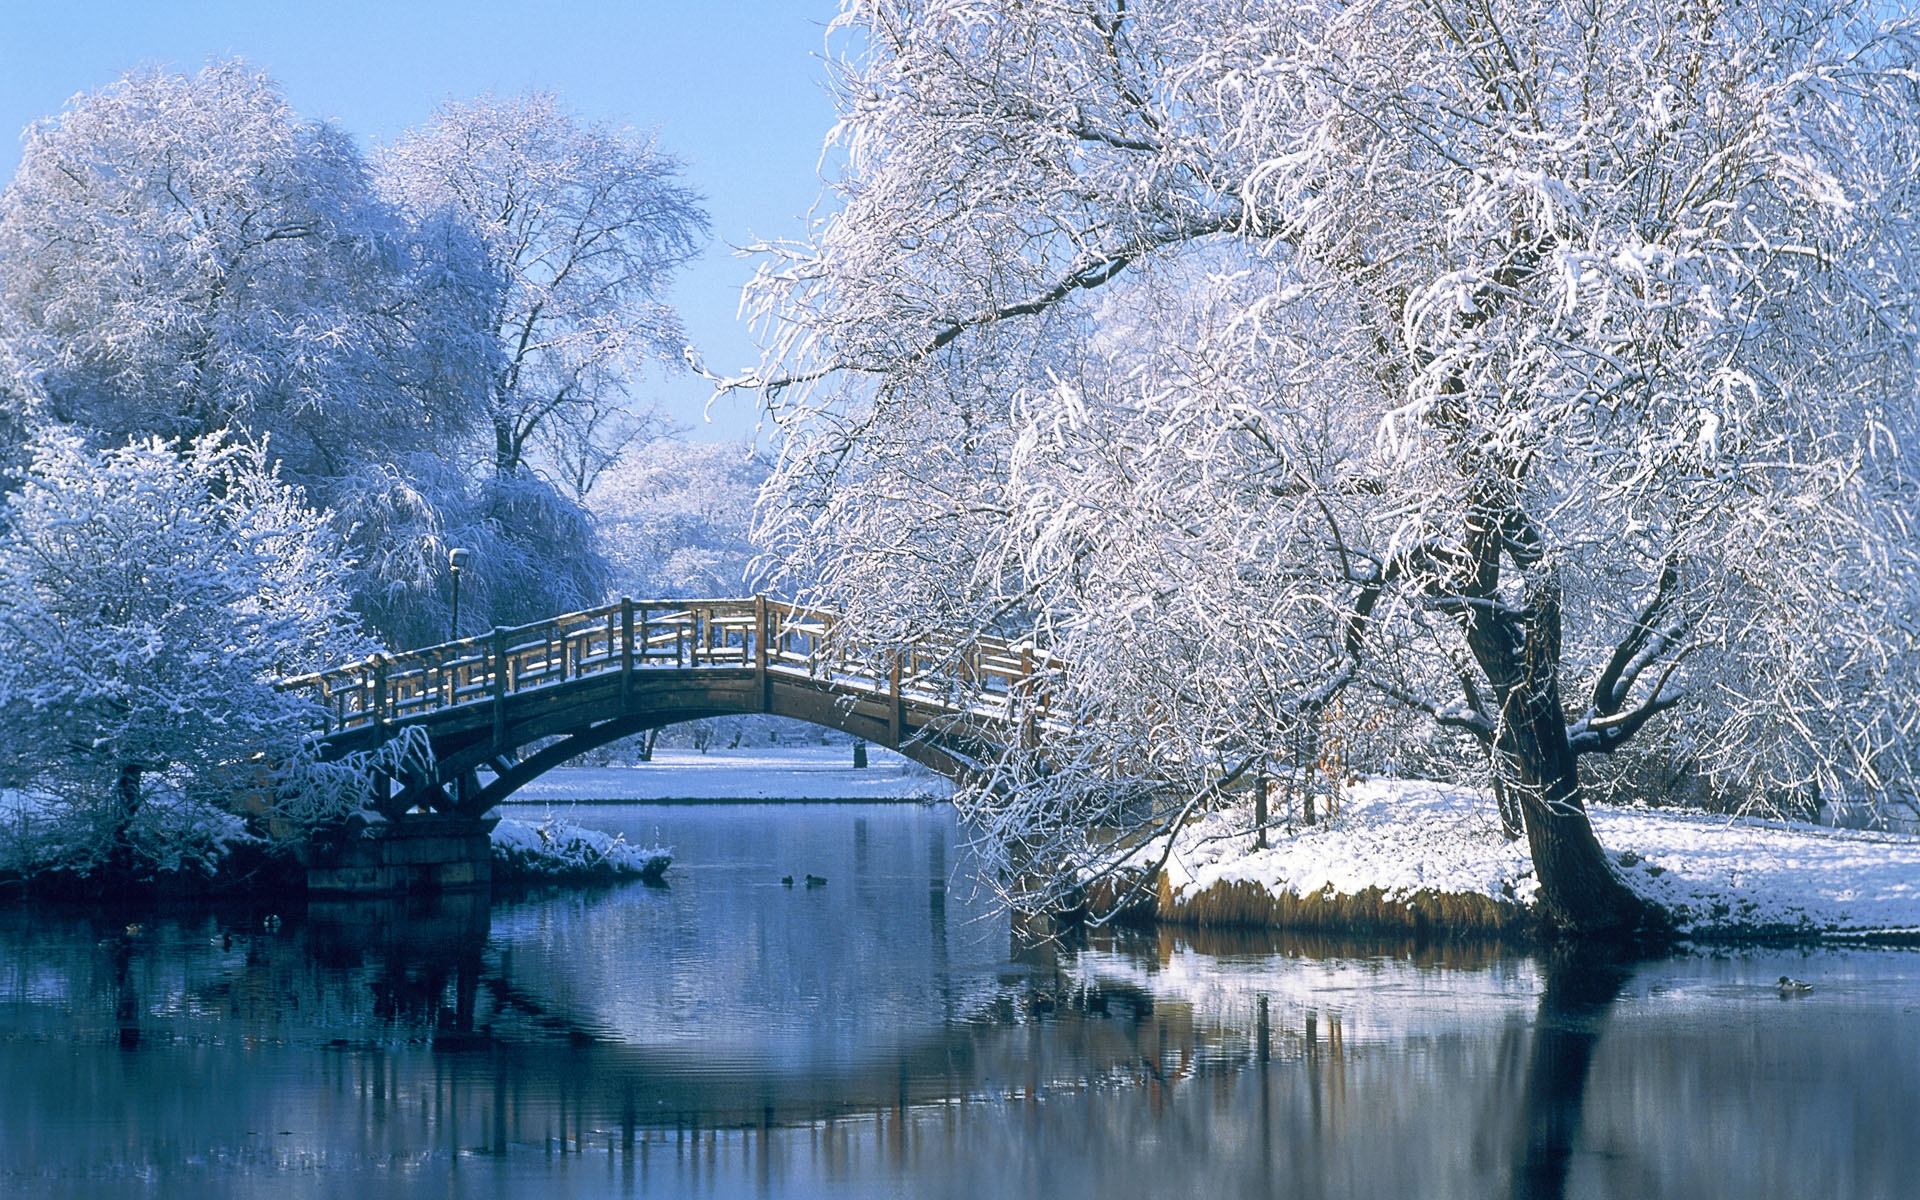 Winter background scenes